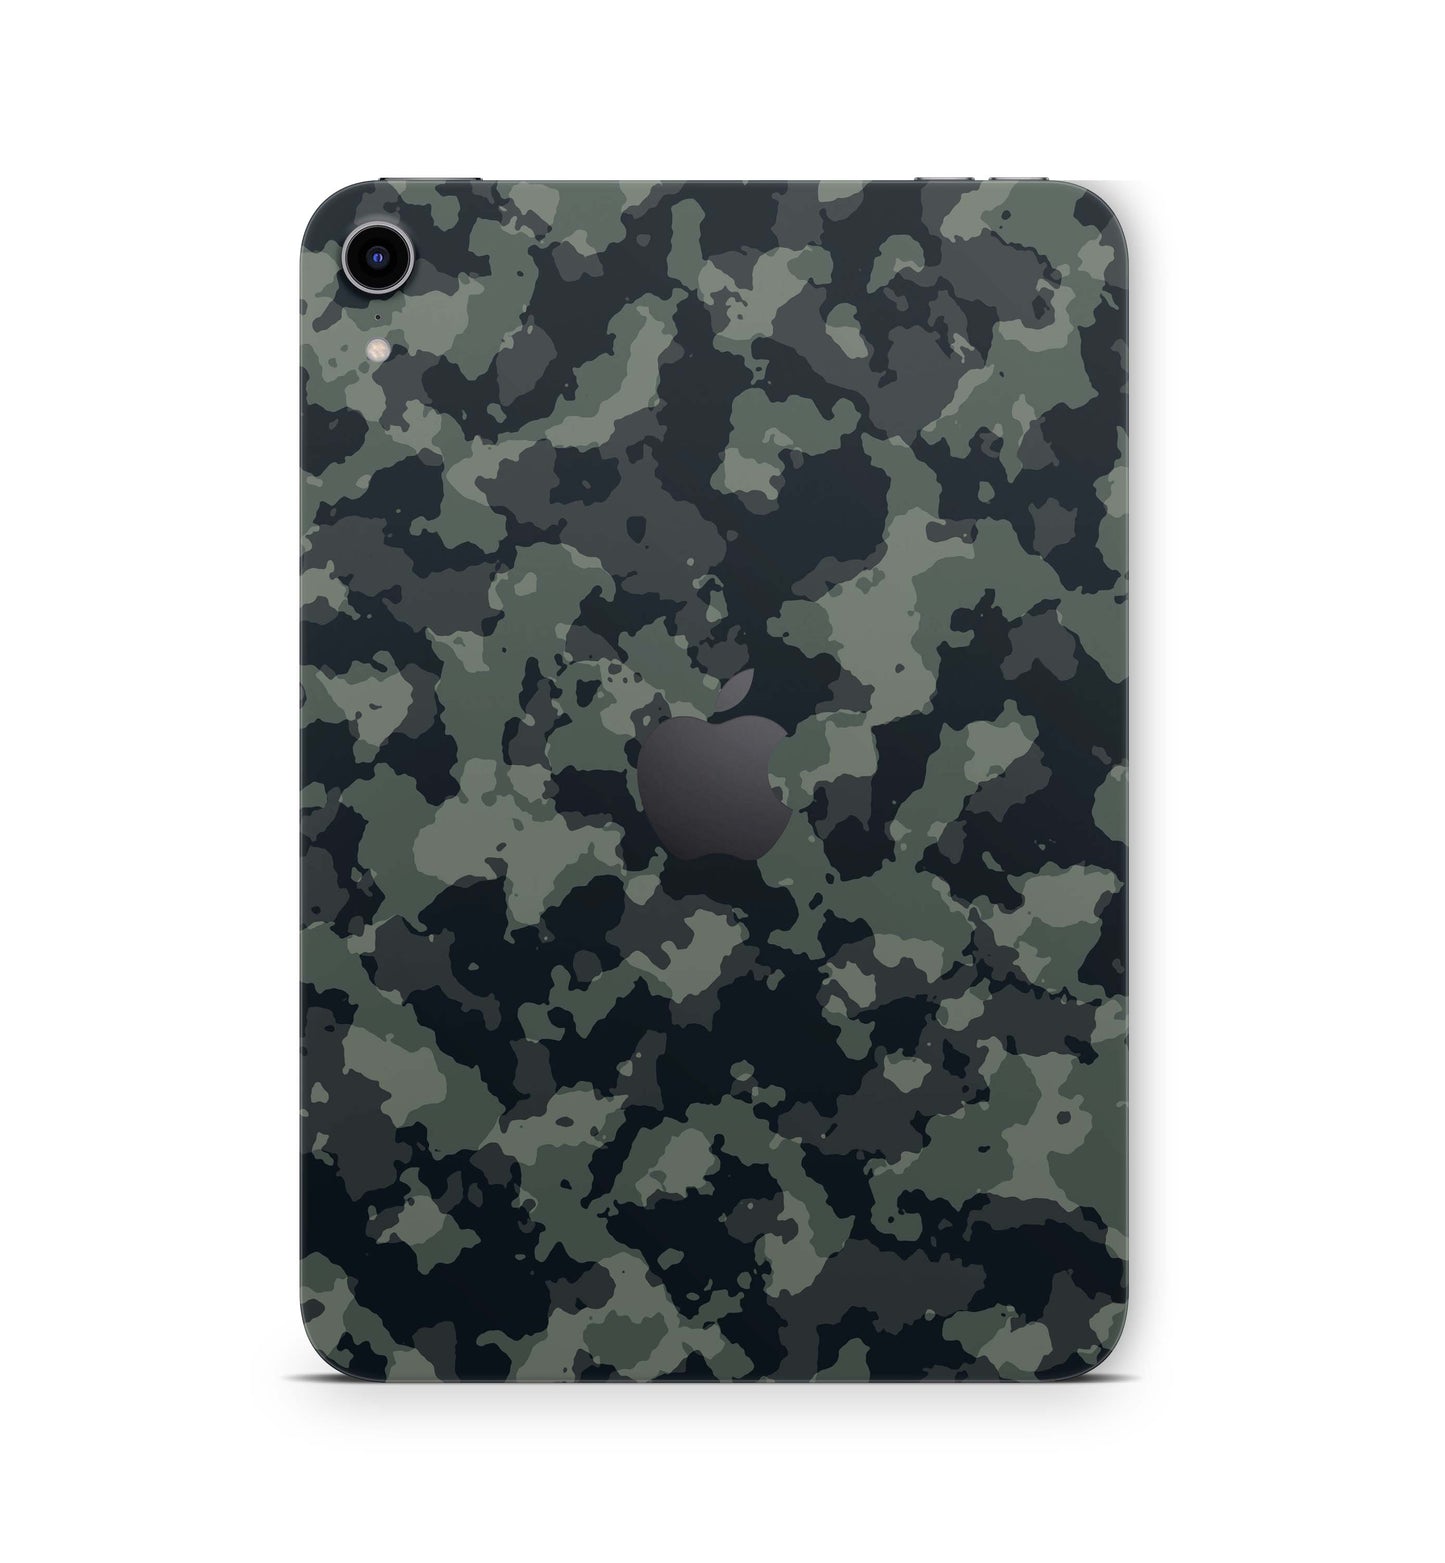 iPad Mini Skin Design Cover Folie Vinyl Skins & Wraps für alle iPad Mini Modelle Aufkleber Skins4u Shadow Camo grün  